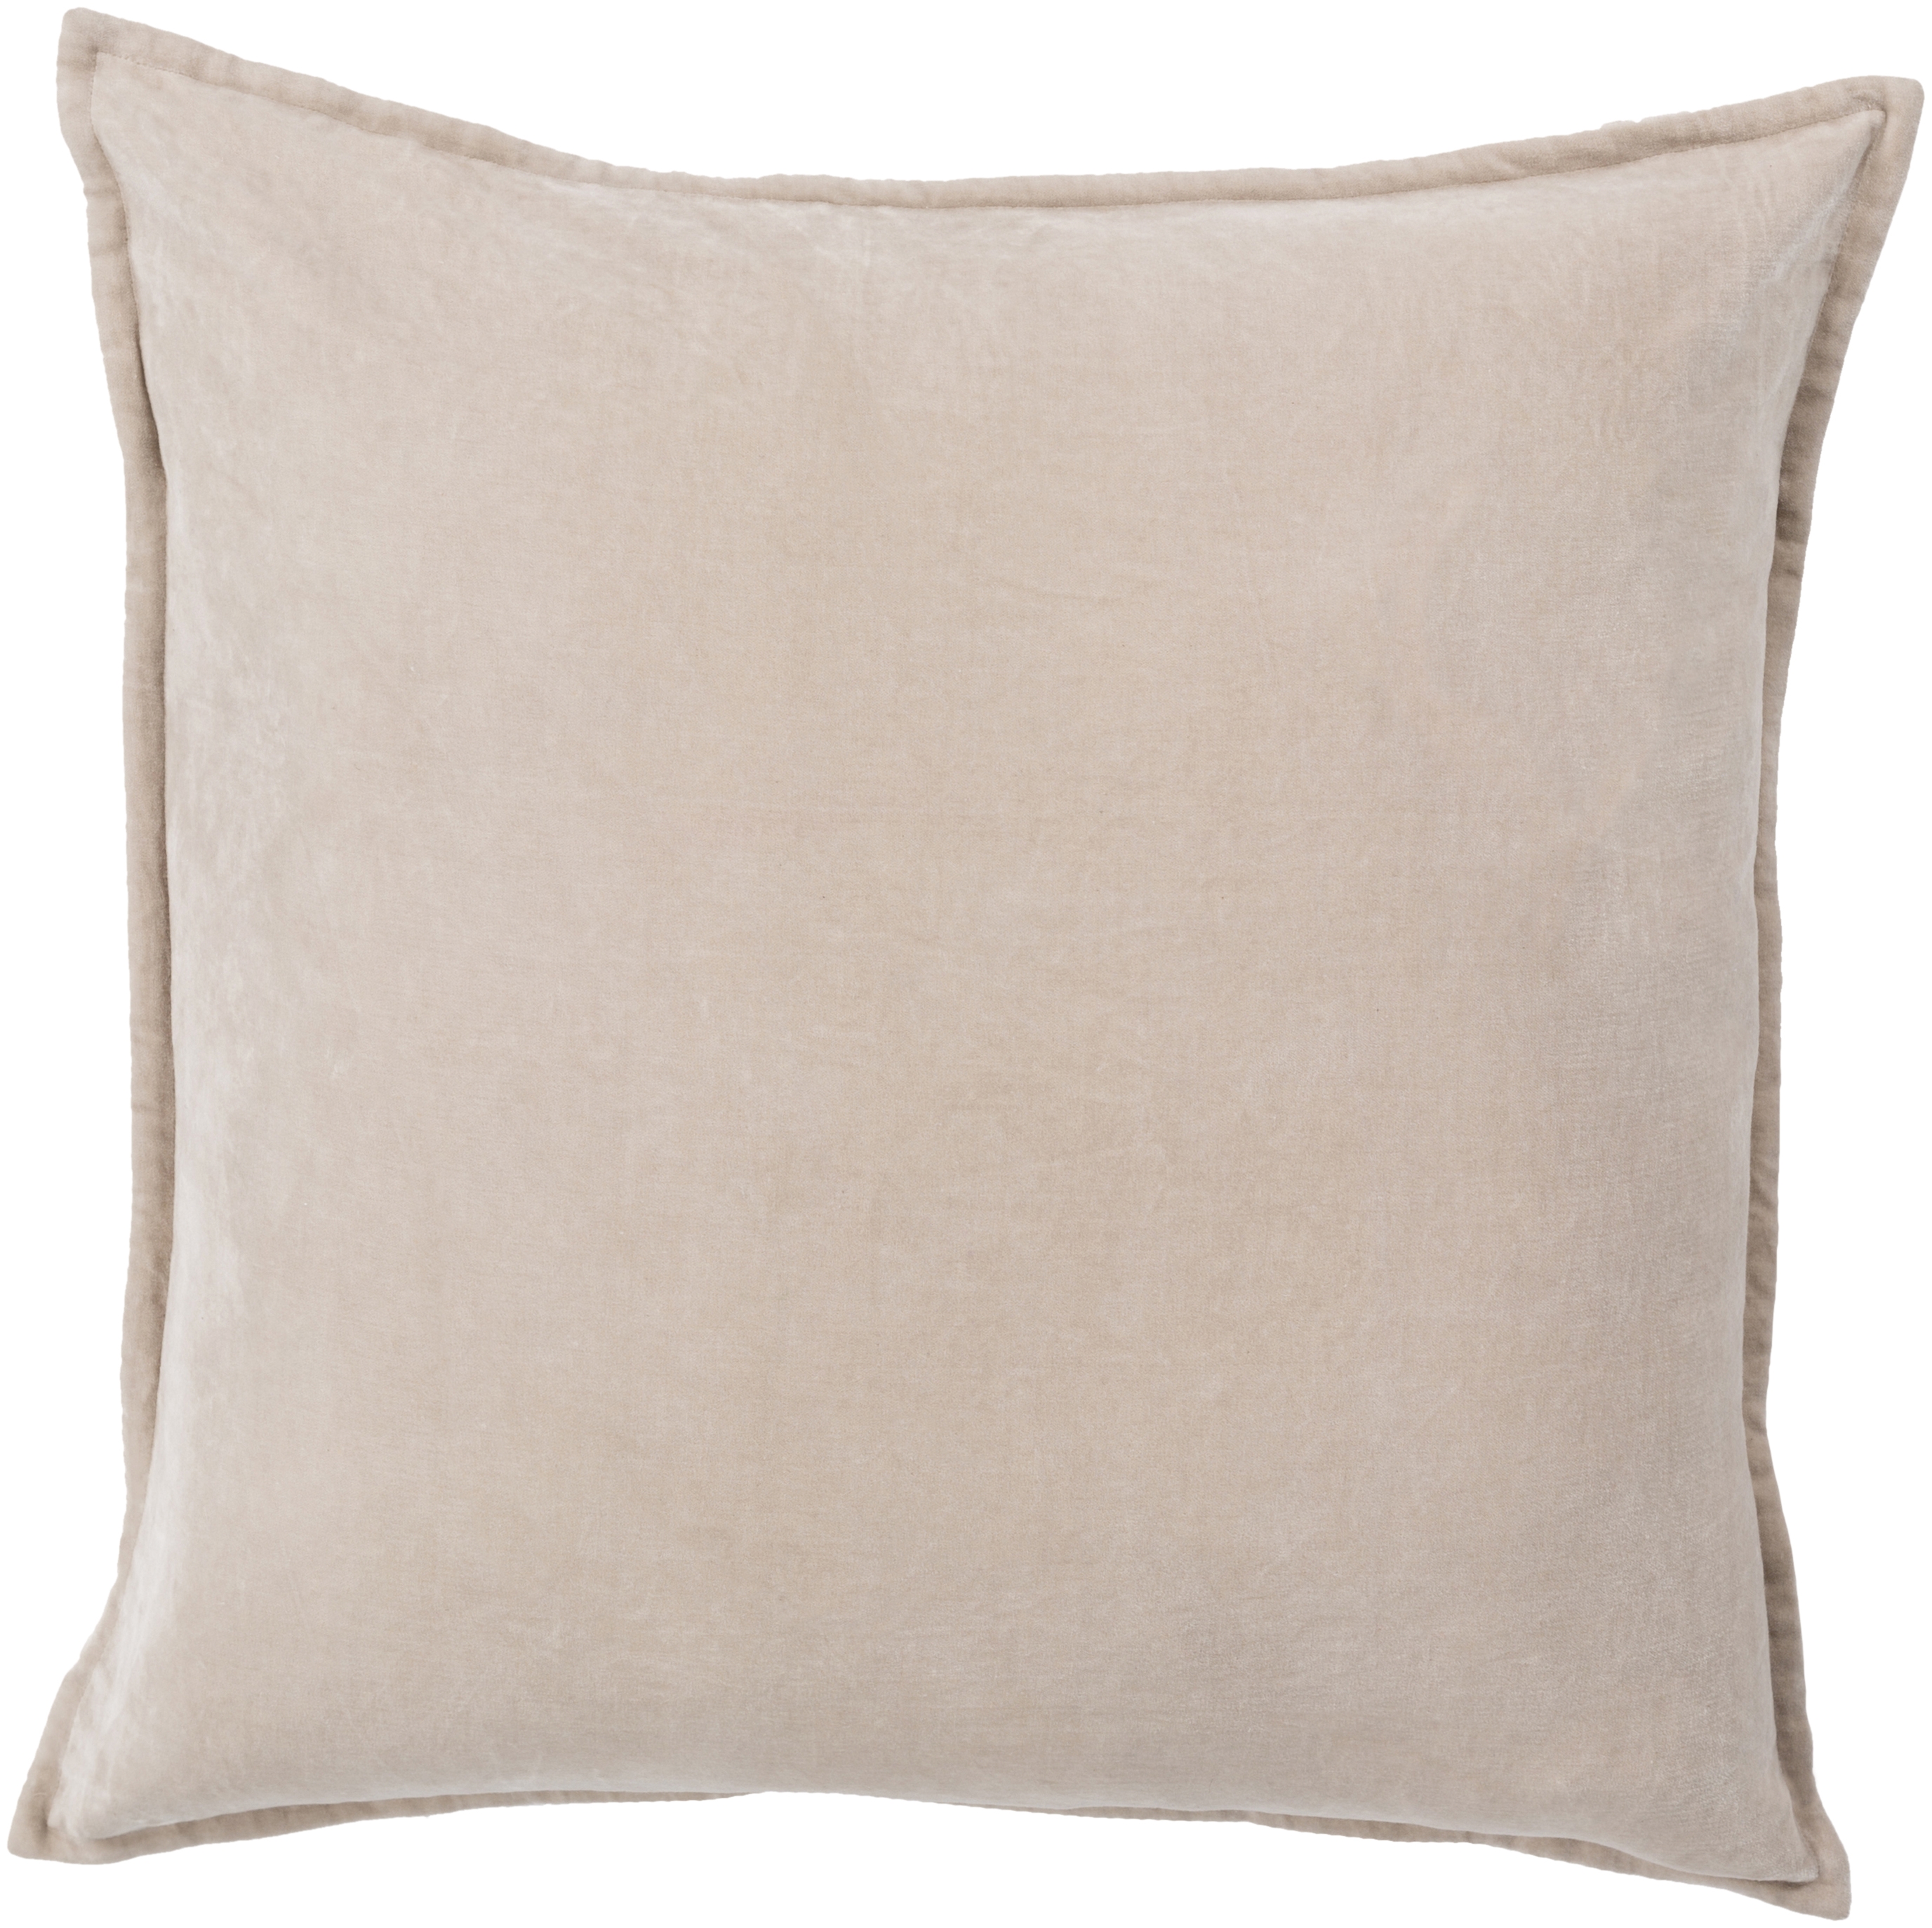 Cotton Velvet Throw Pillow, 22" x 22", with down insert - Image 0